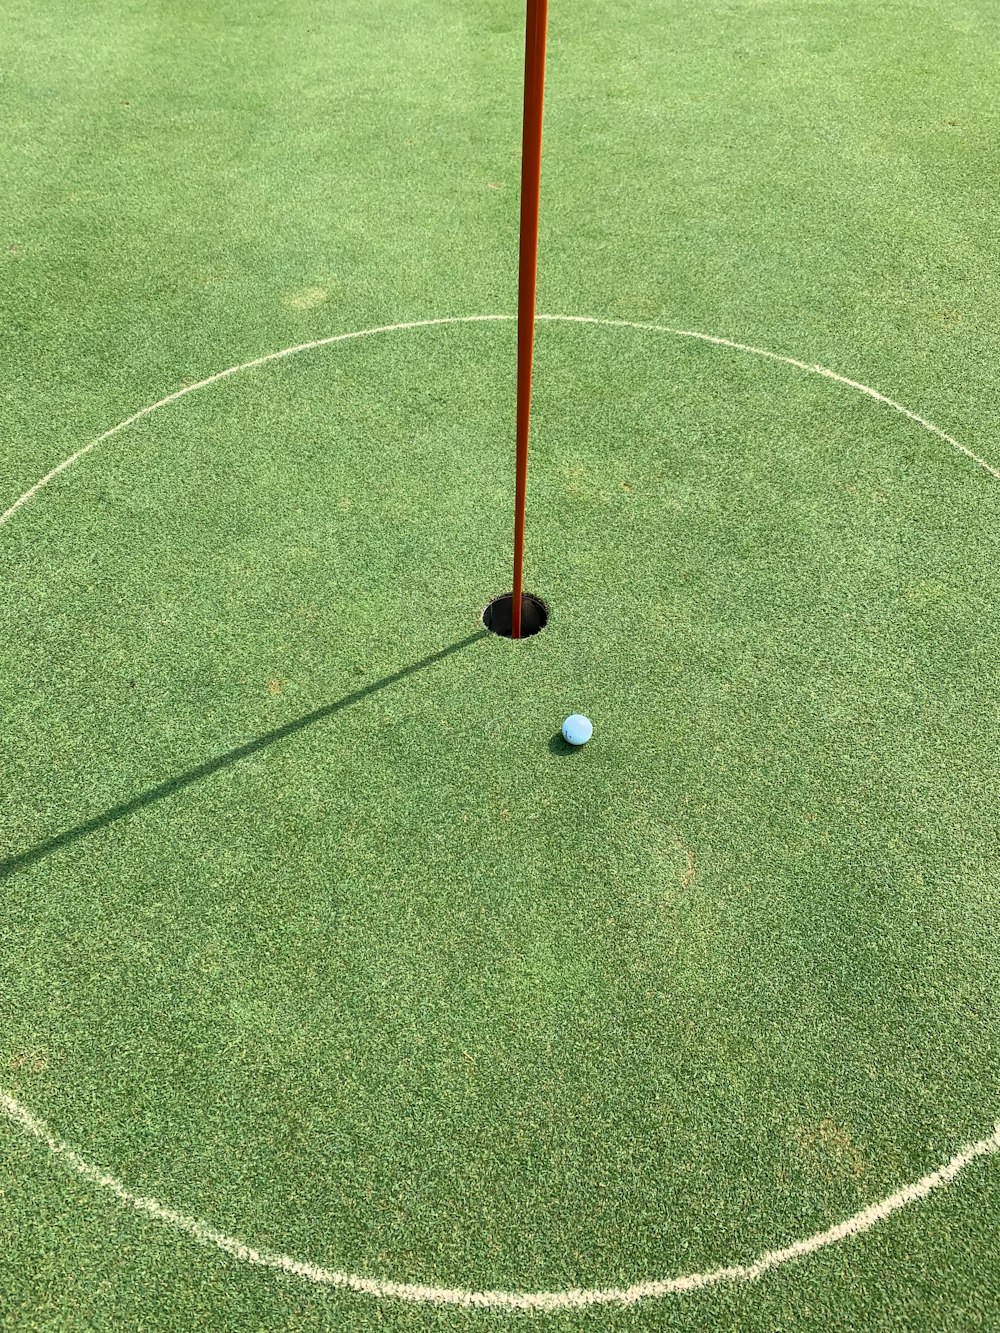 blue golf ball near golf hole